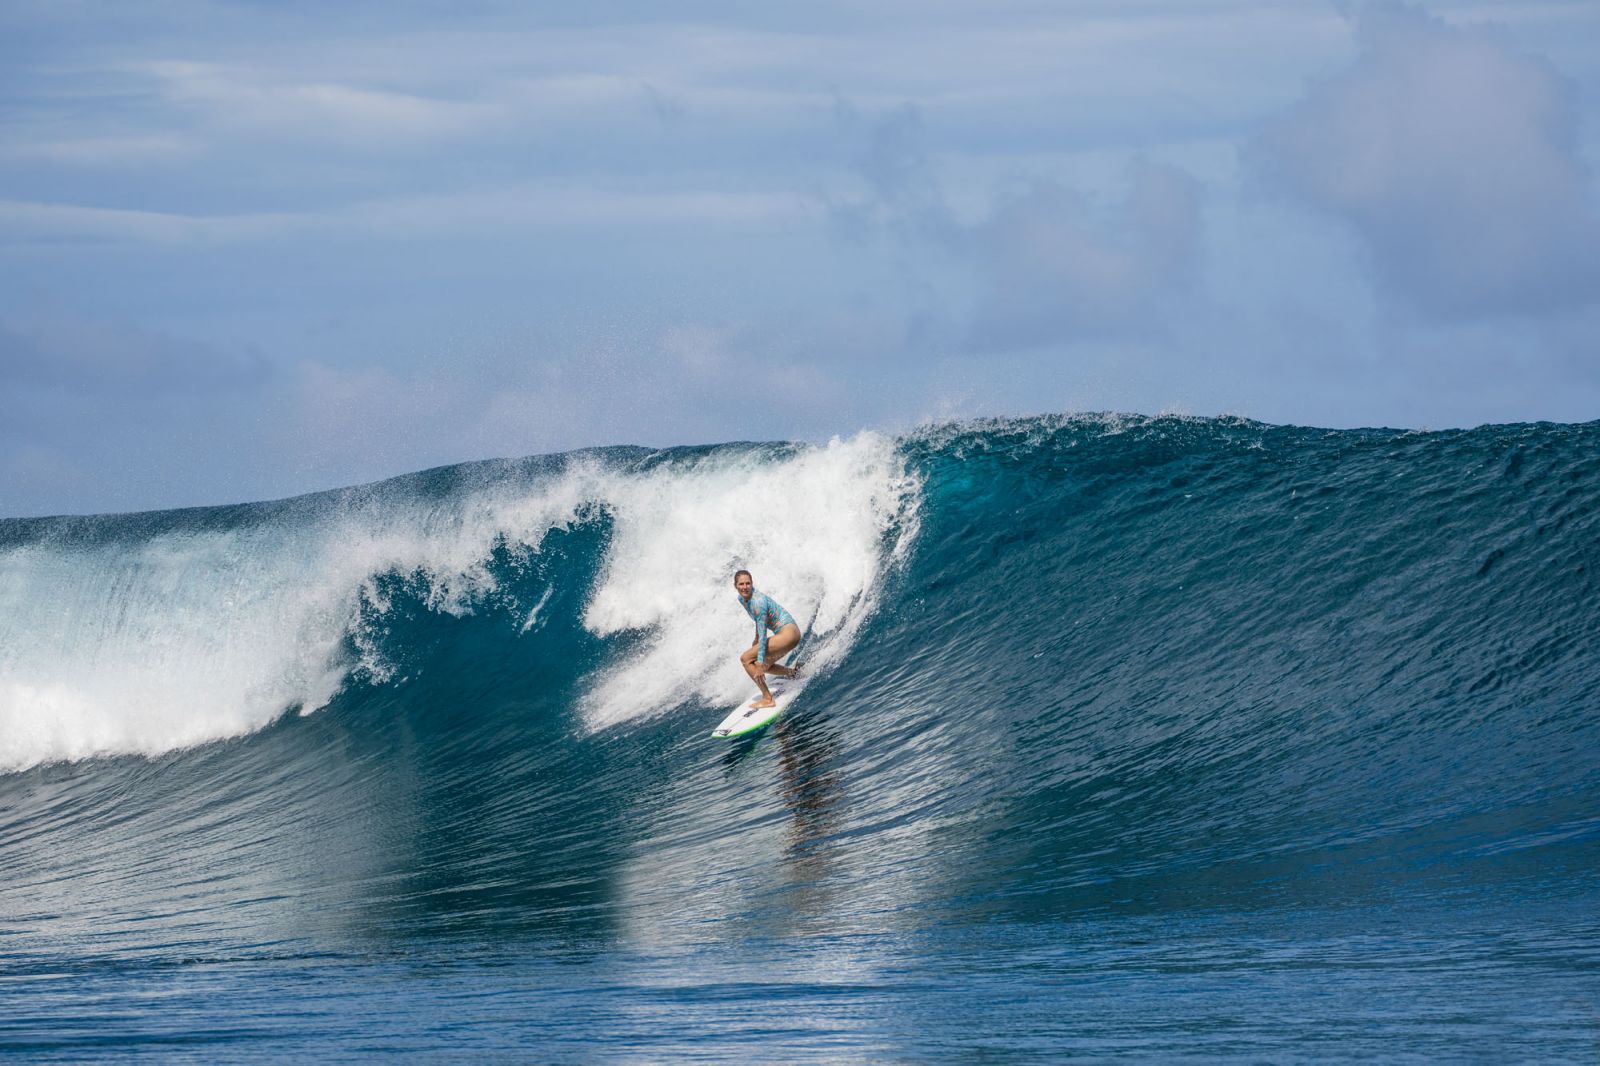 Steph Gilmore ROXY Pro Surf